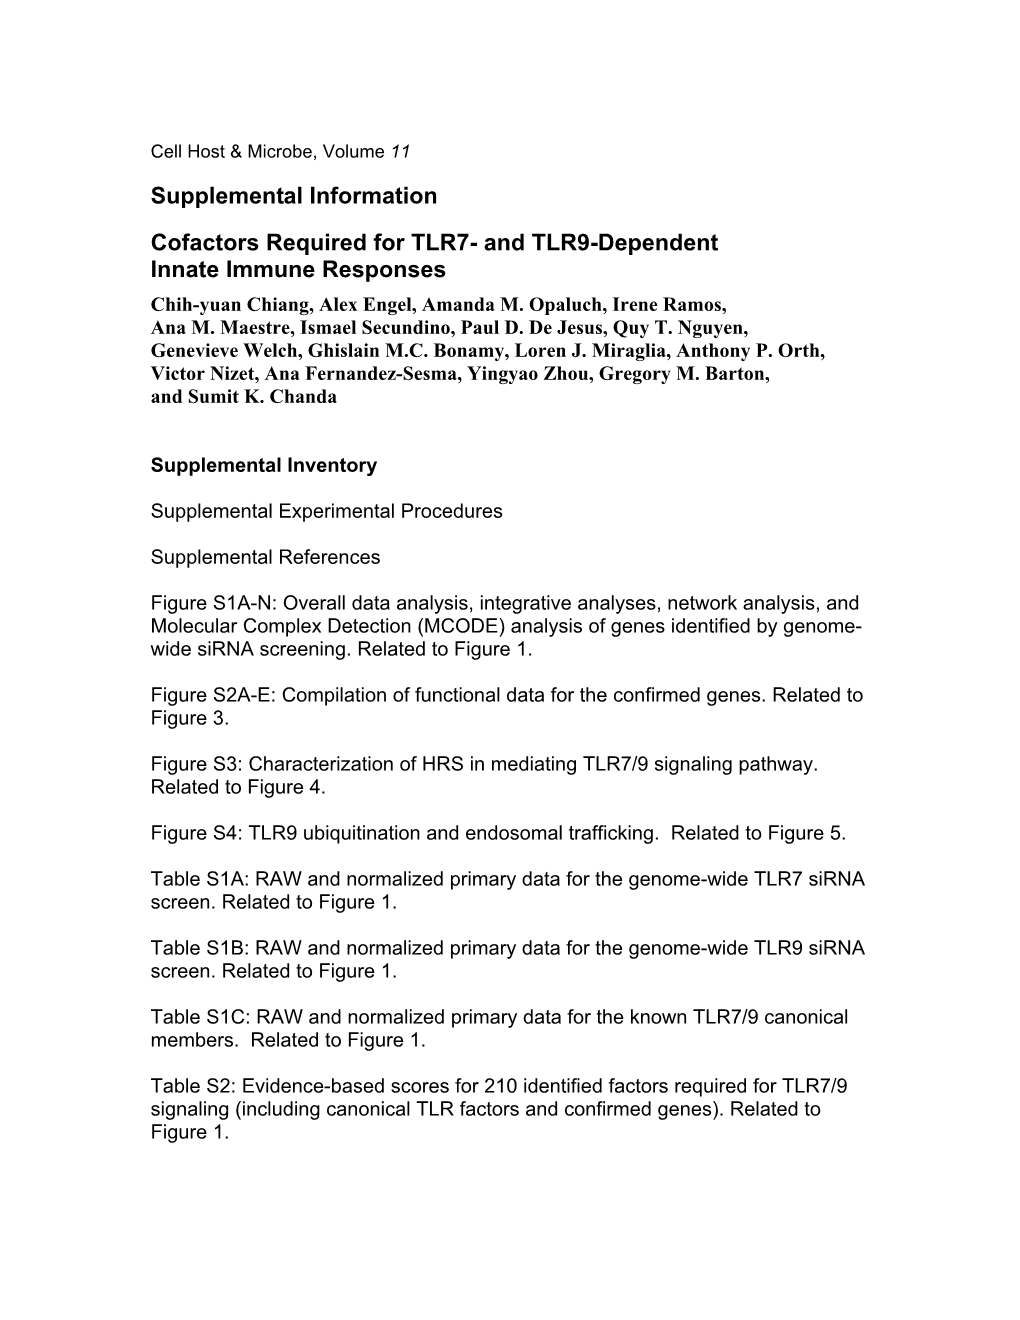 Supplemental Information Cofactors Required for TLR7